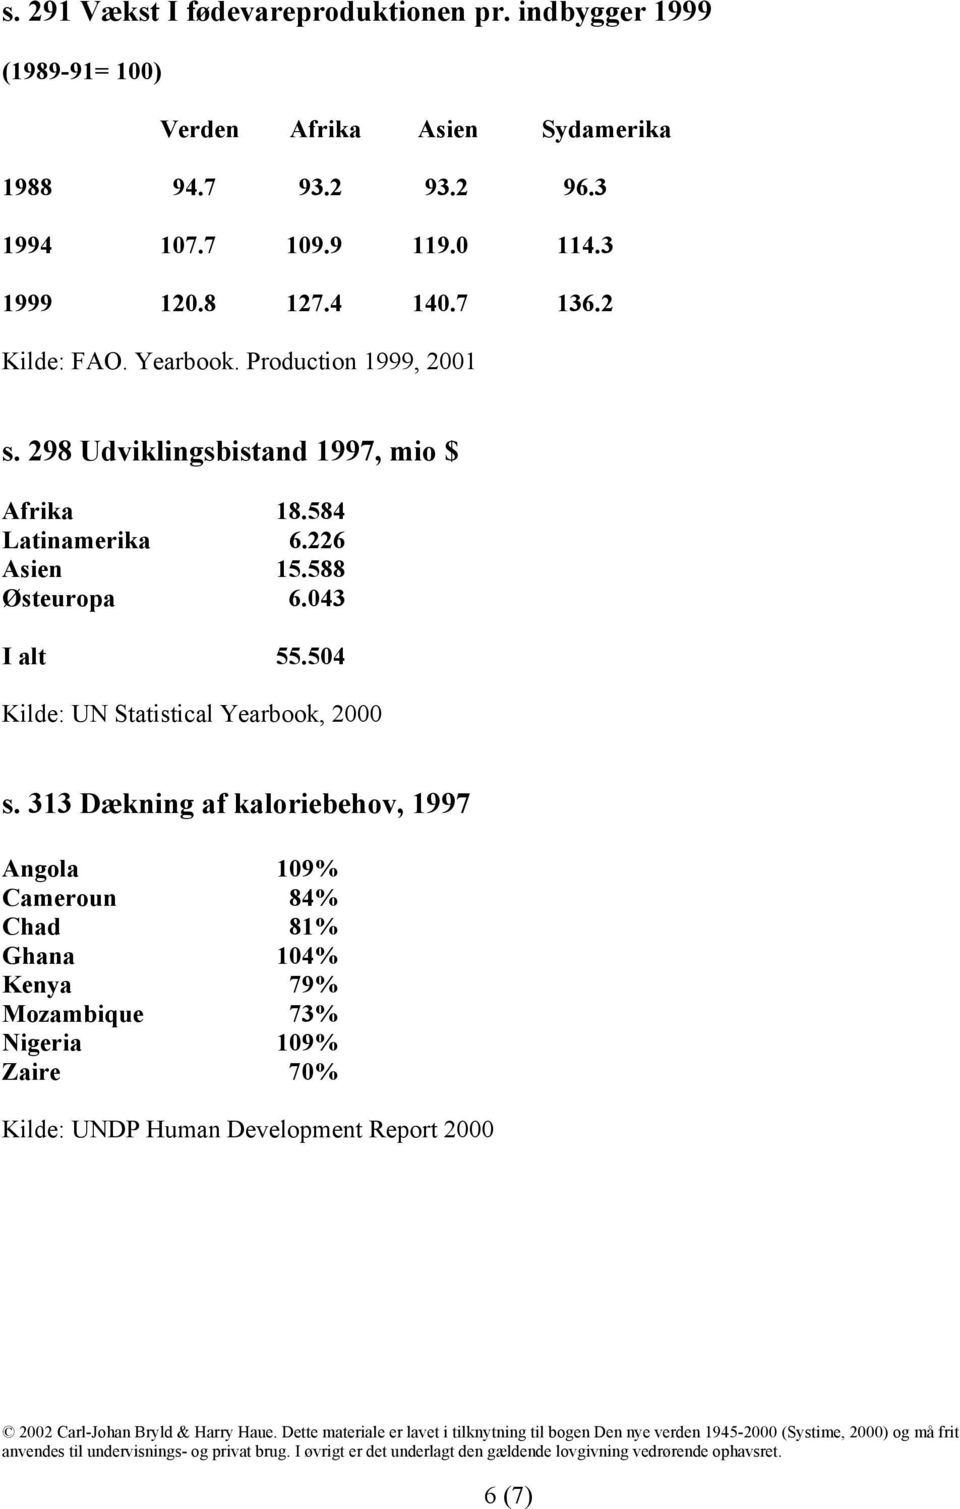 298 Udviklingsbistand 1997, mio $ Afrika 18.584 Latinamerika 6.226 Asien 15.588 Østeuropa 6.043 I alt 55.